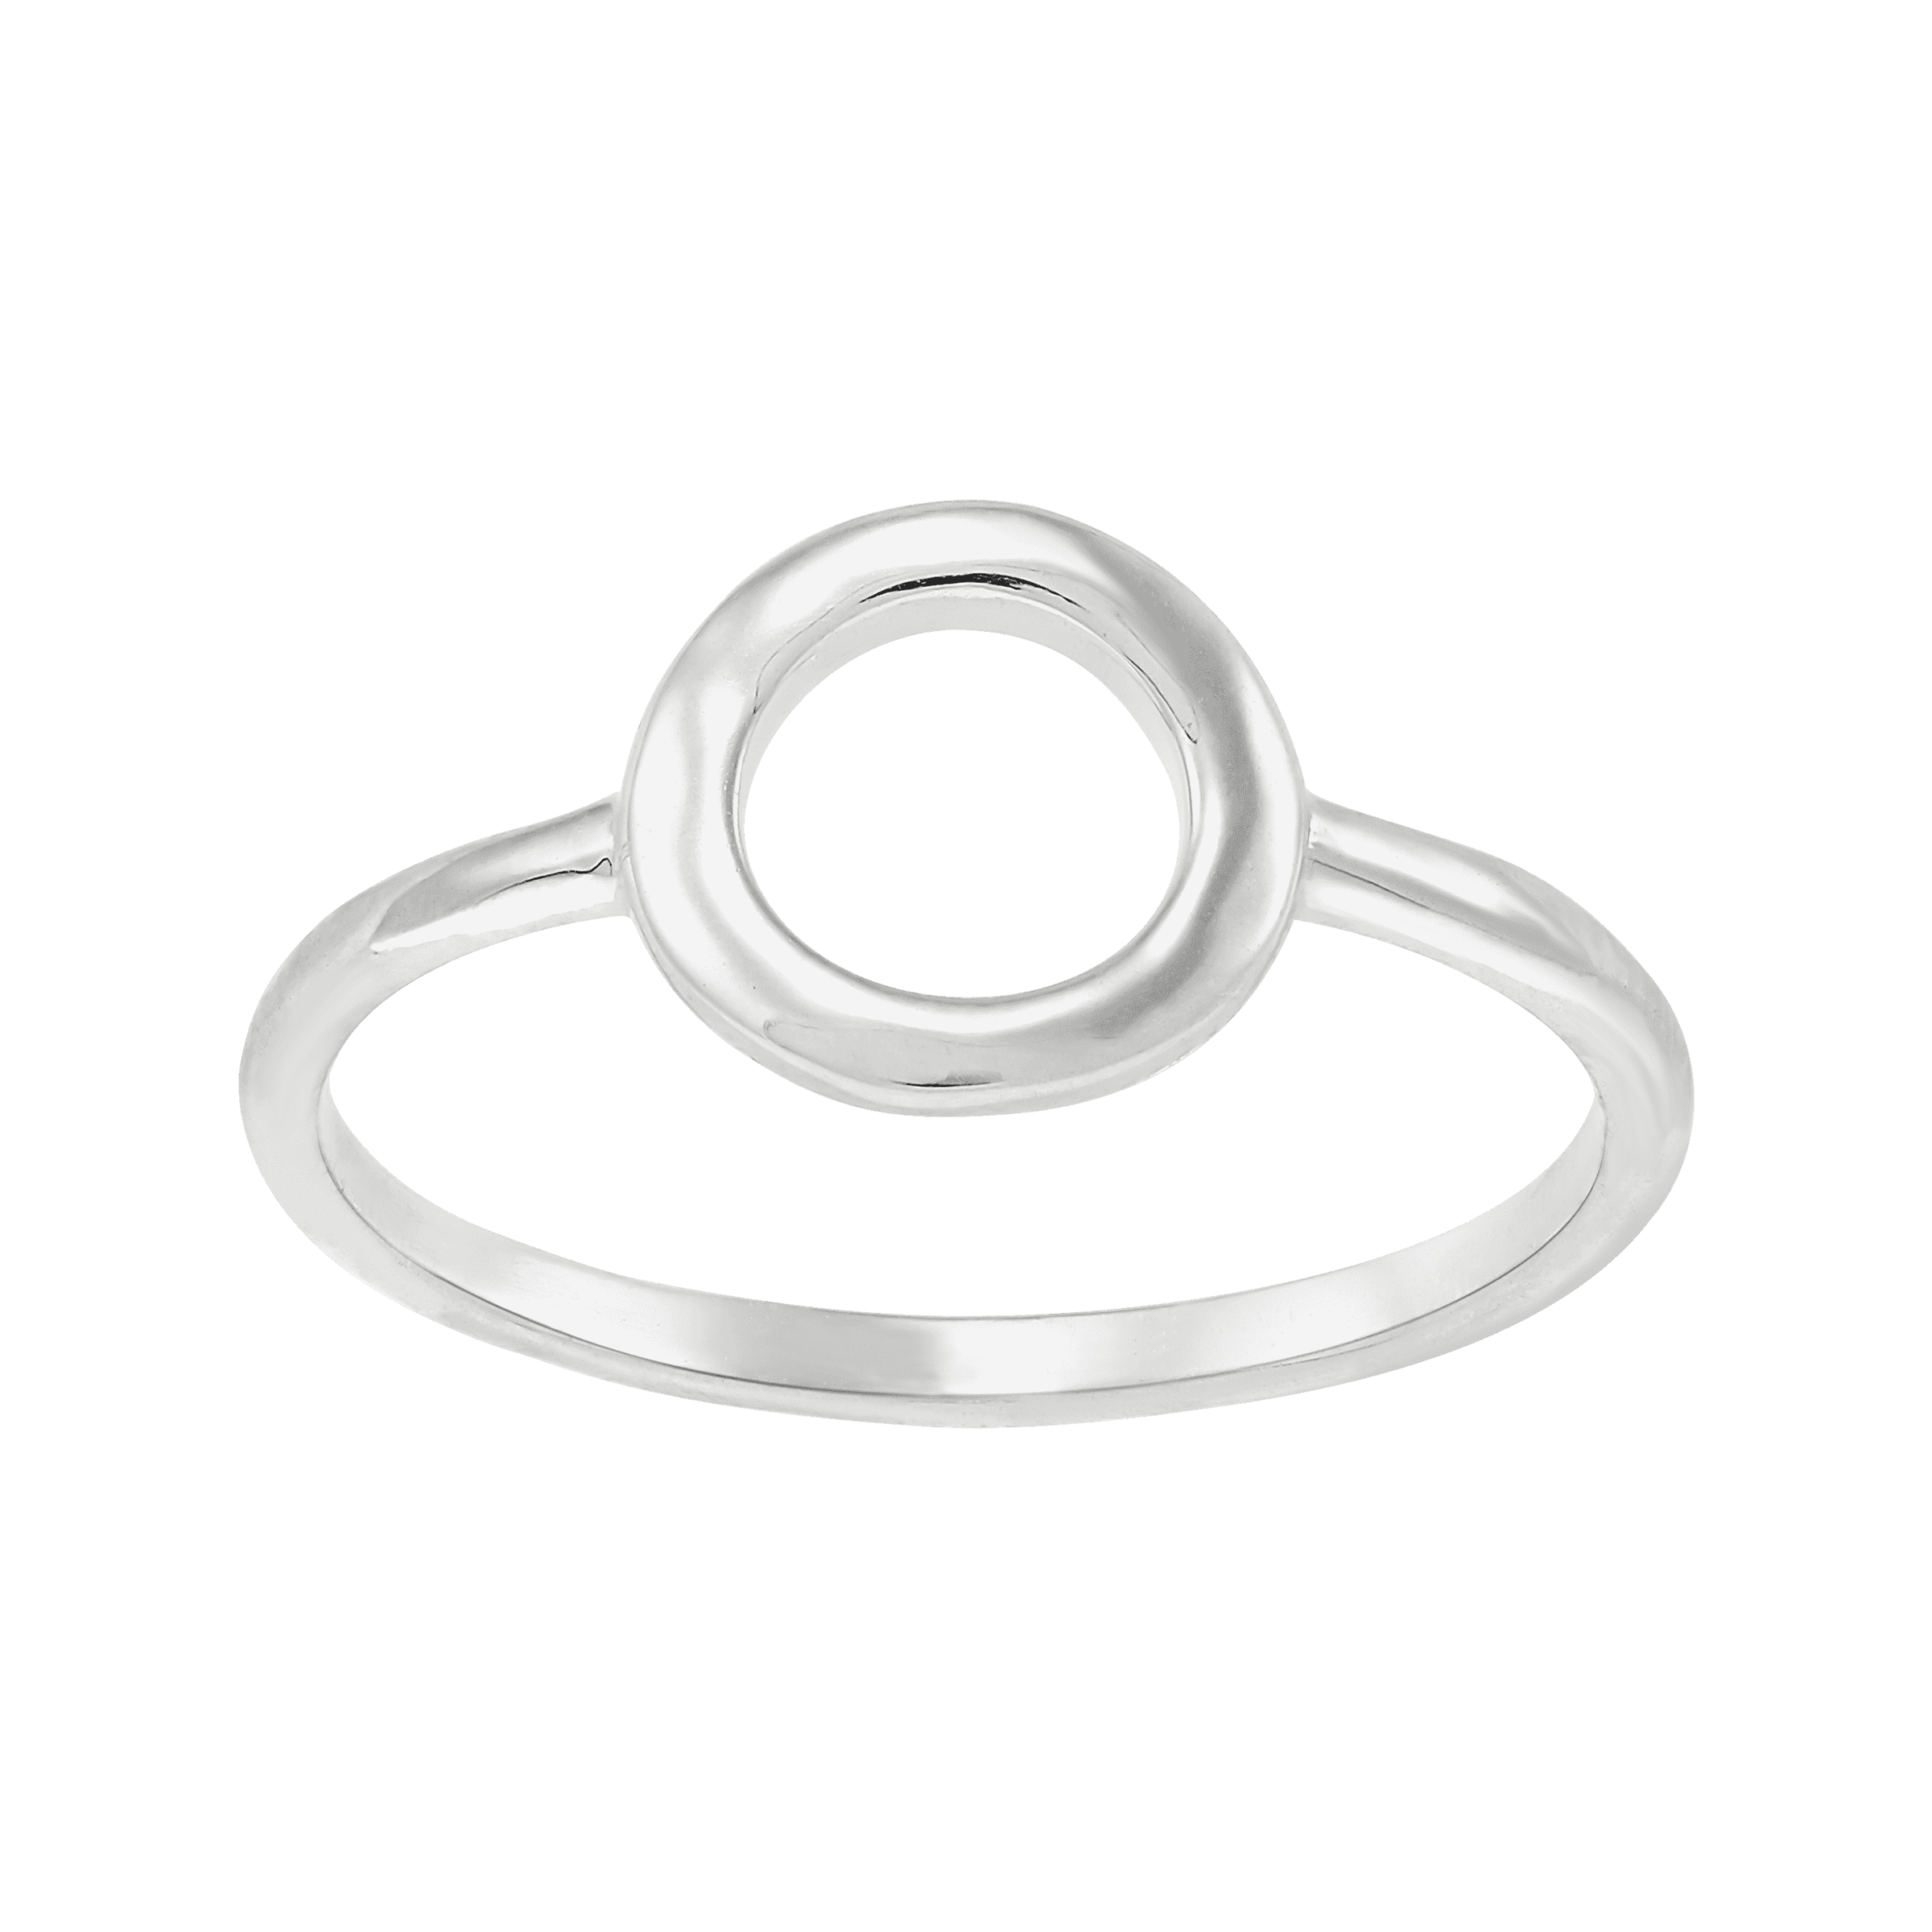 Silpada 'Petite Karma' Ring in Sterling Silver | Silpada